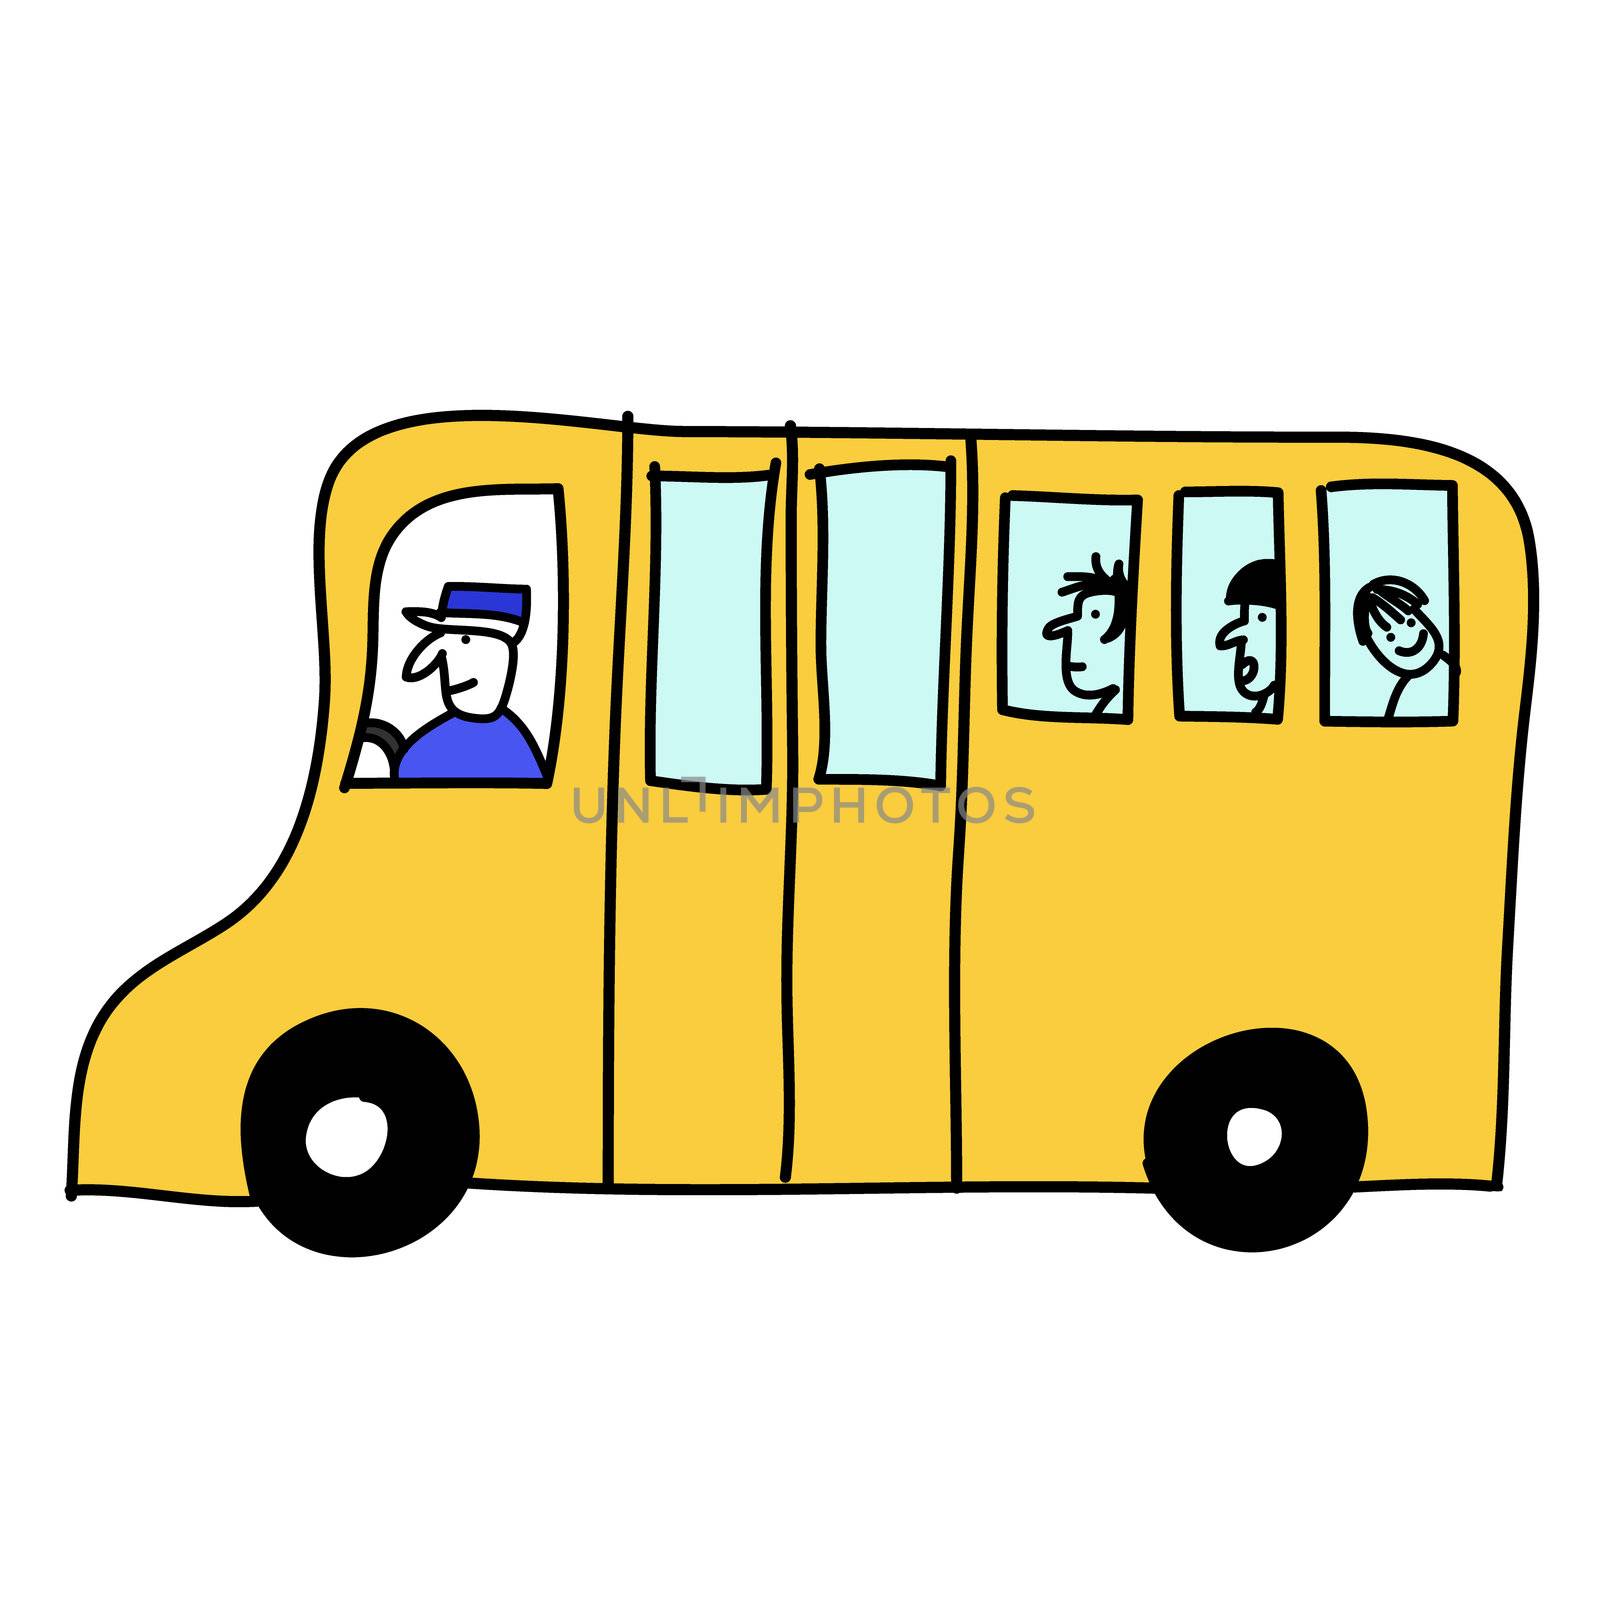 bus transportation by jukurae